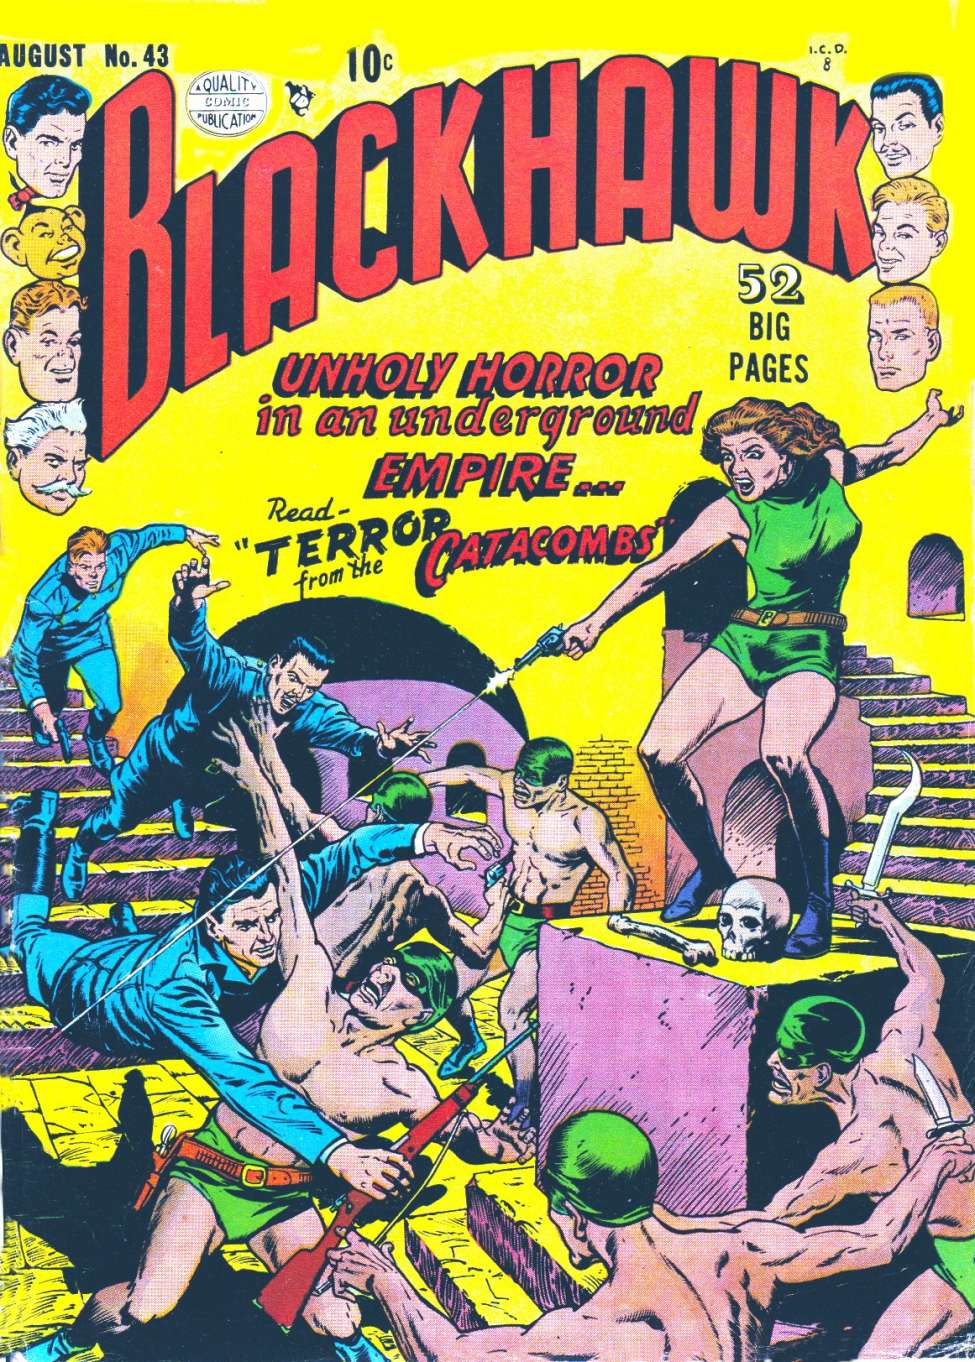 Comic Book Cover For Blackhawk 43